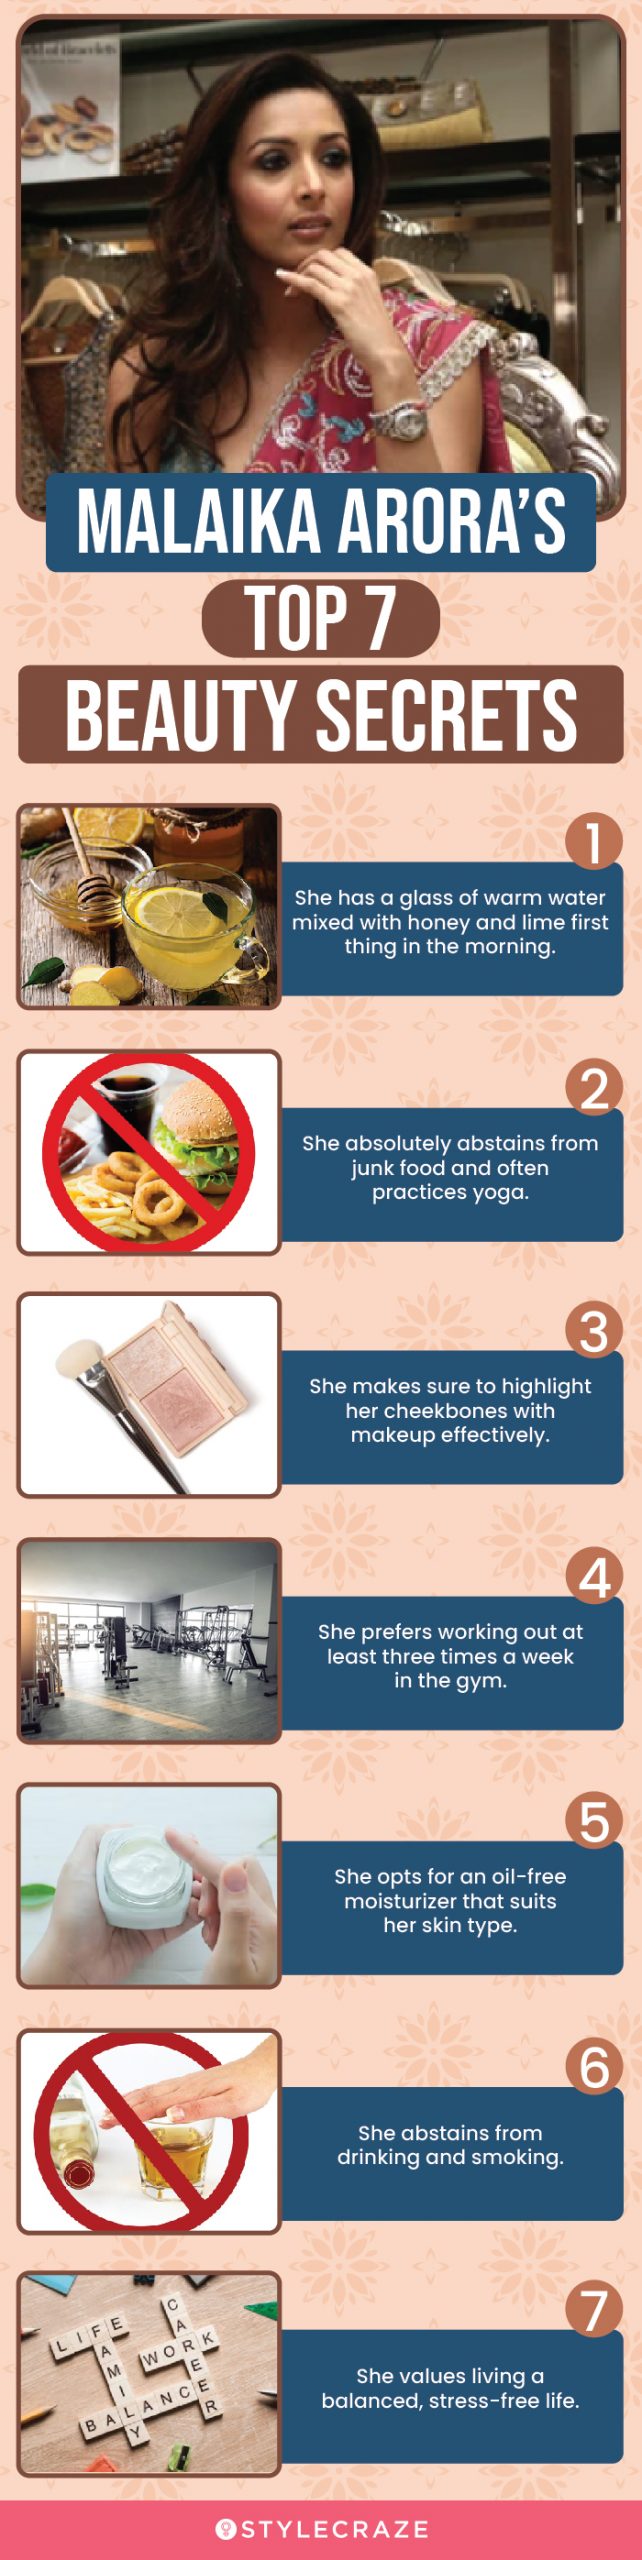 malaika arora’s top 7 beauty secrets (infographic)